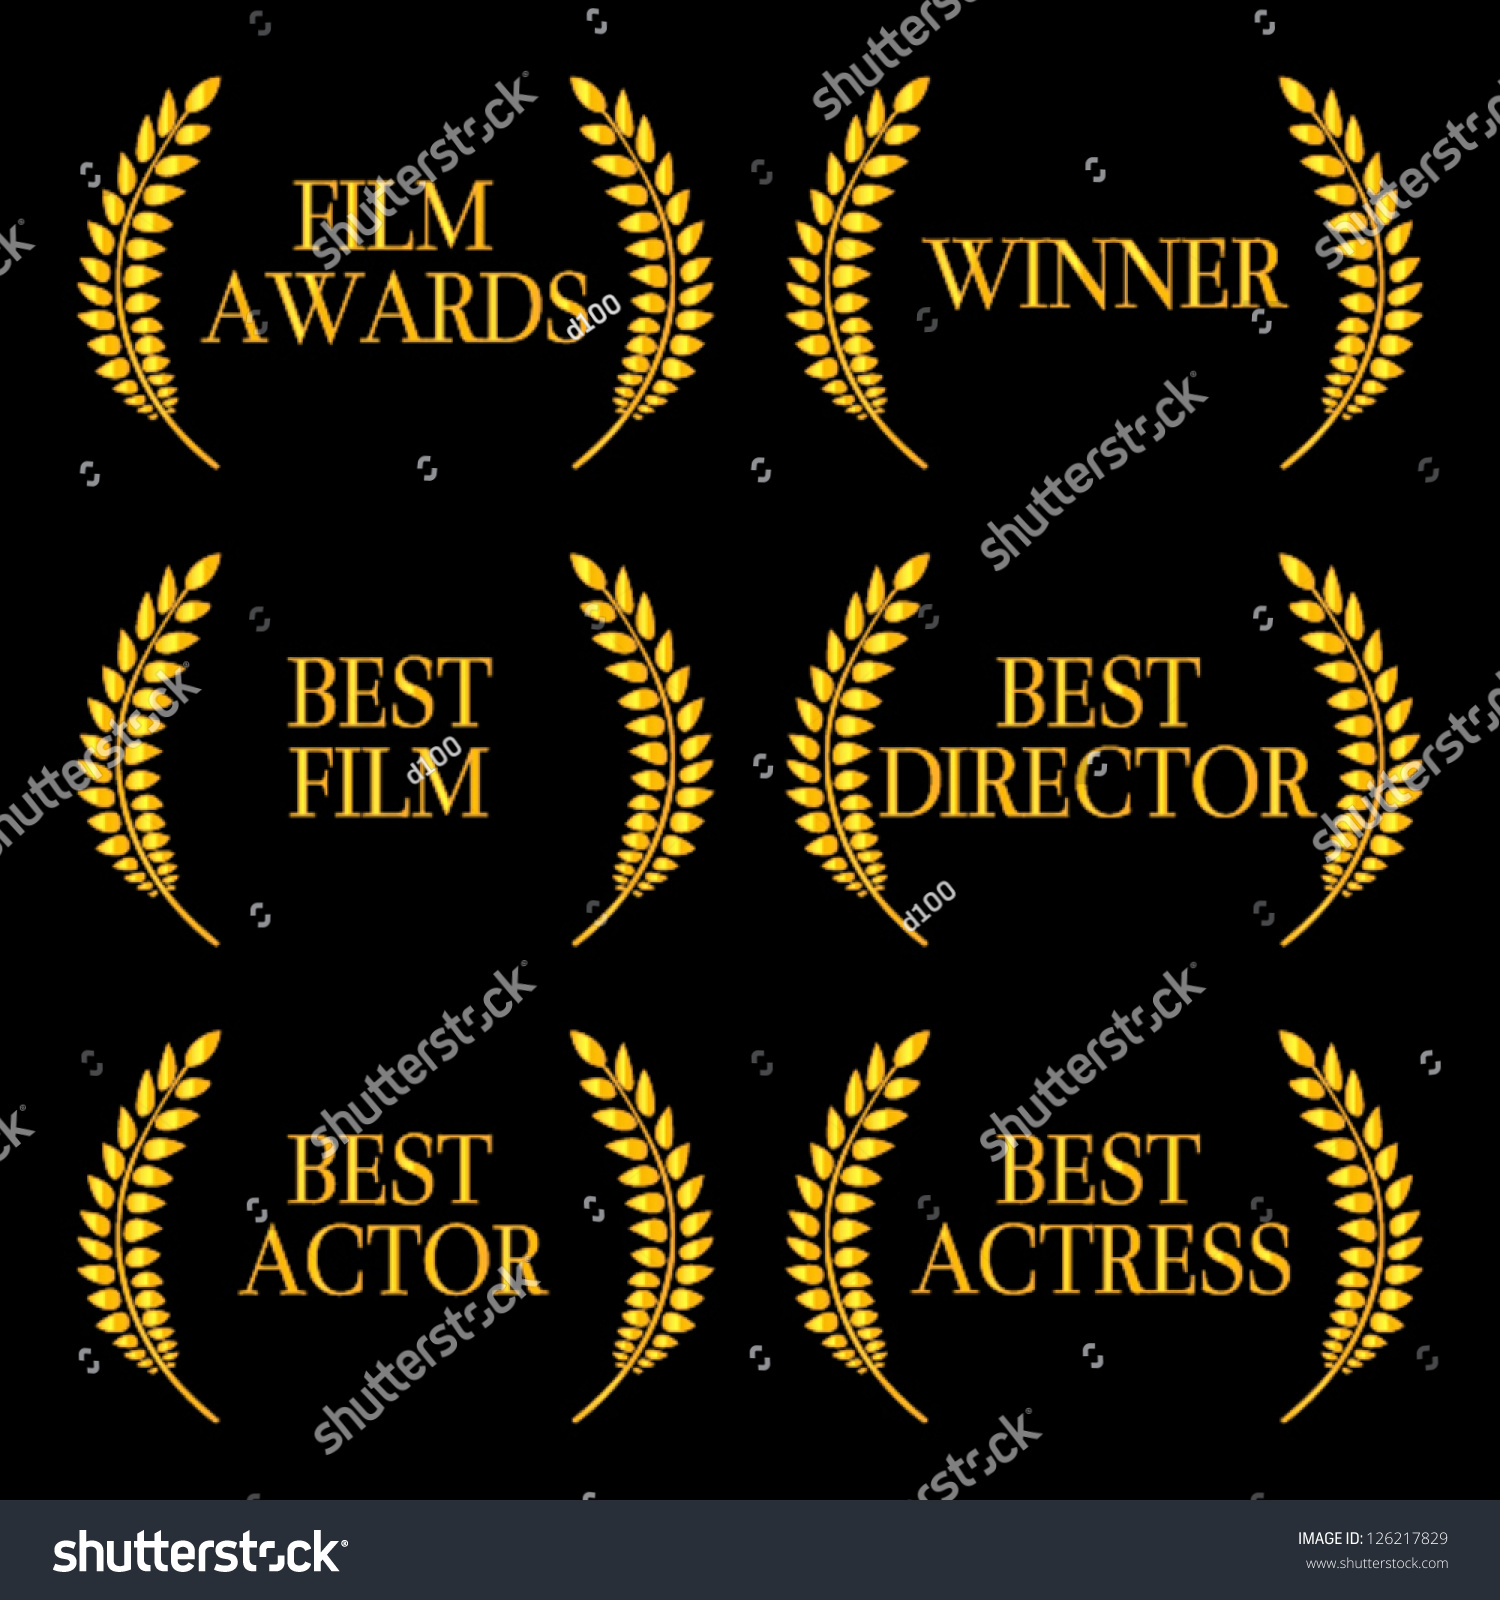 Film Awards Winners 2 Stock Vector 126217829 - Shutterstock